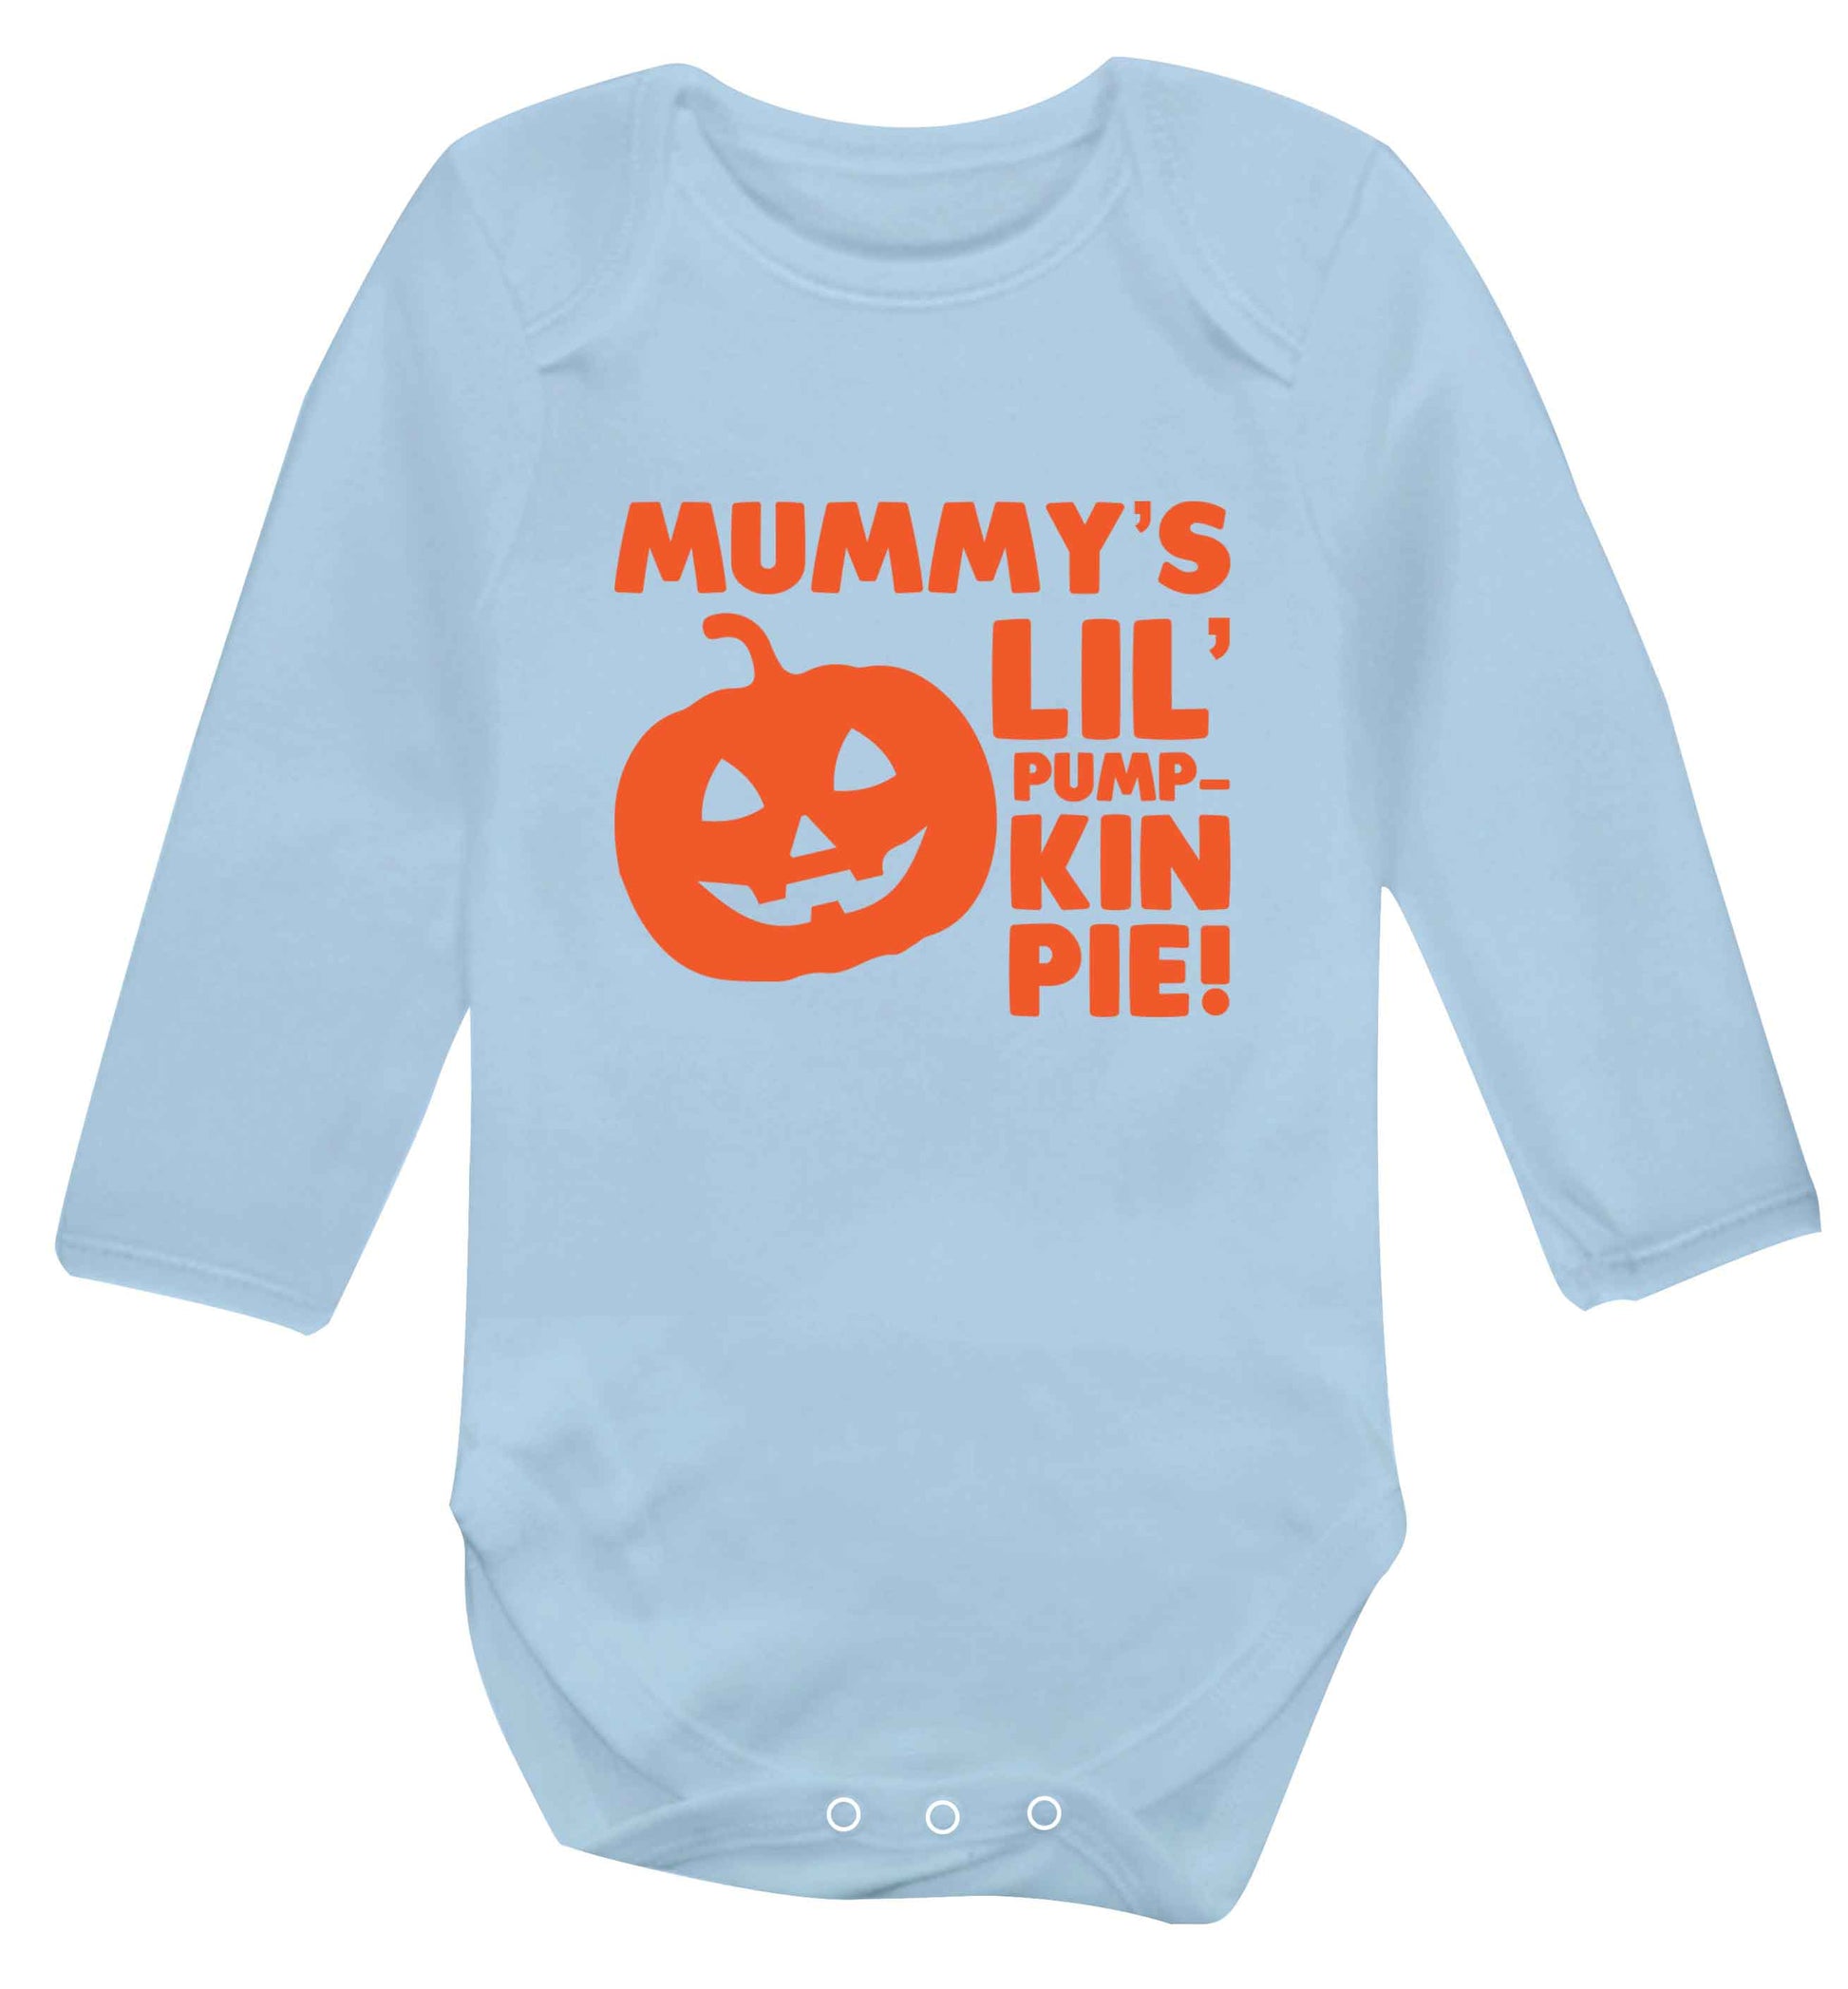 Mummy's lil' pumpkin pie baby vest long sleeved pale blue 6-12 months